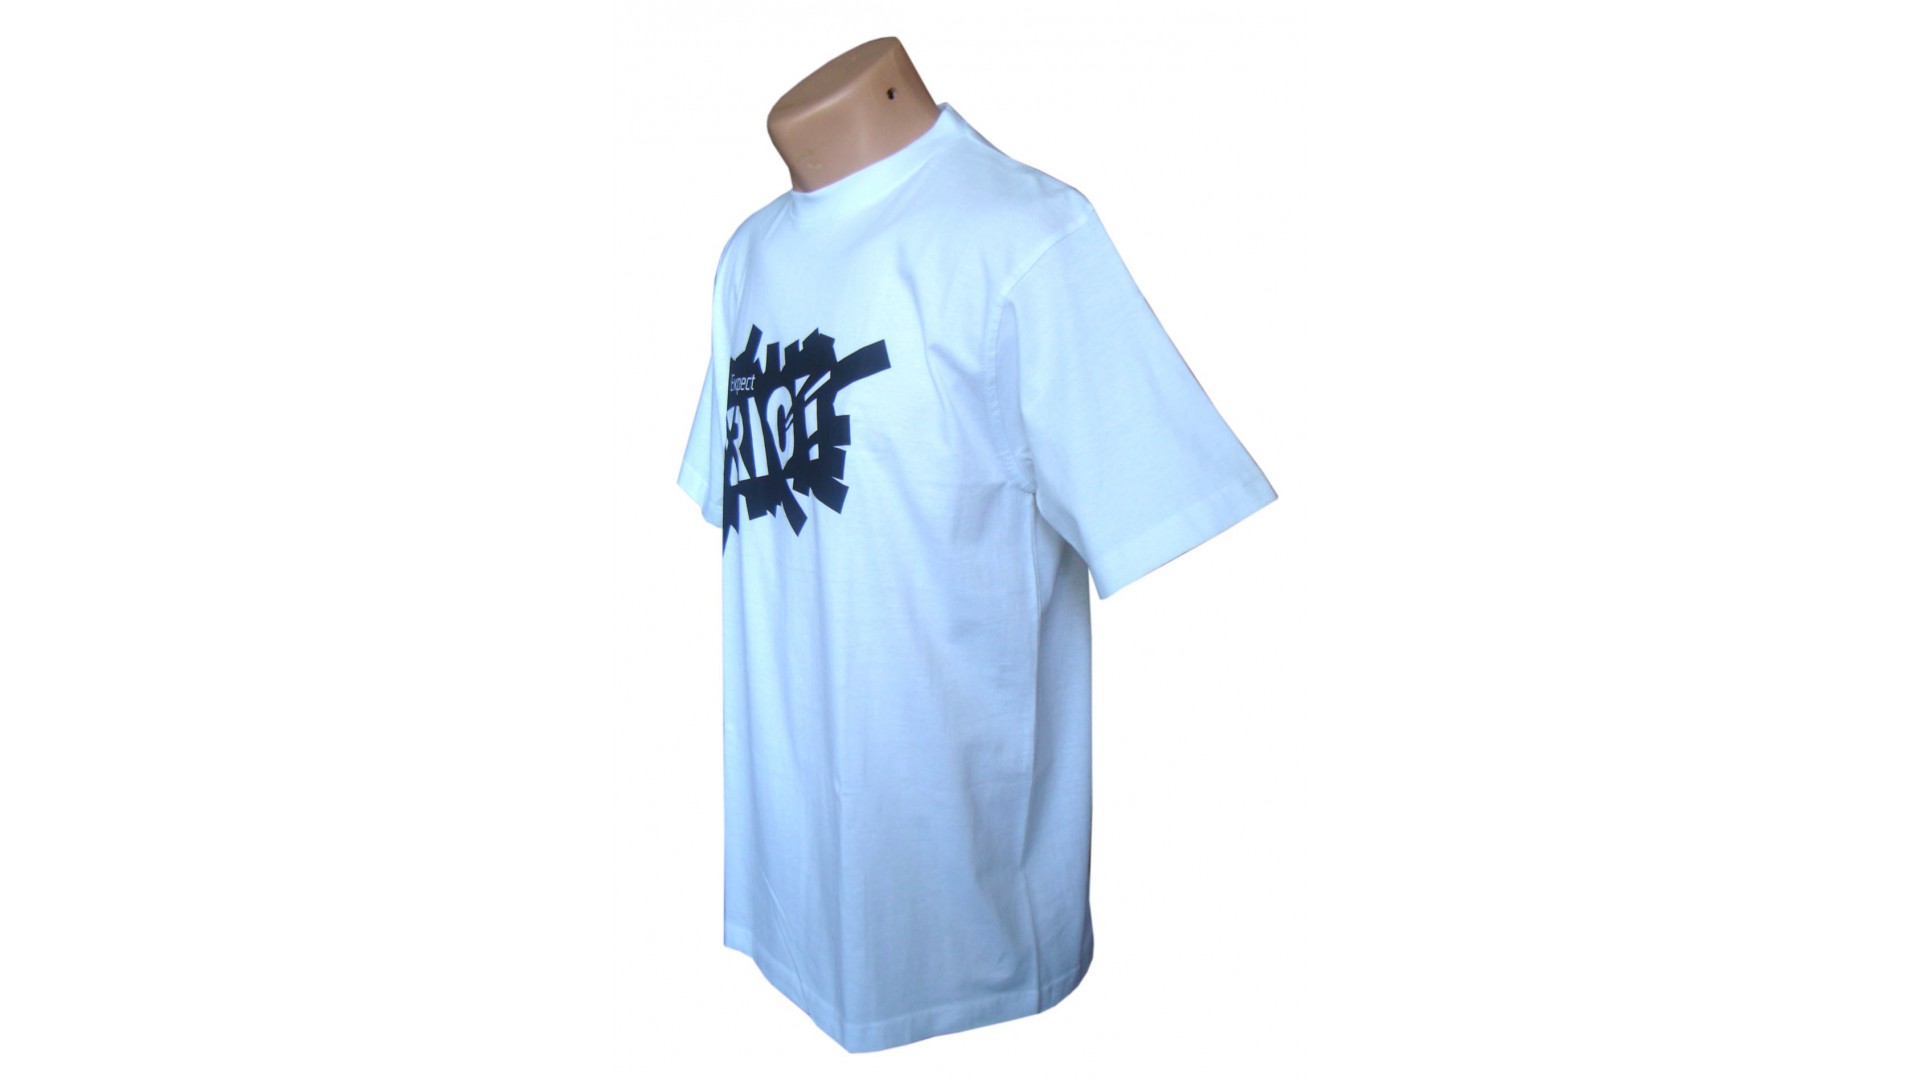 Футболка Ghost T-shirt white год 2015